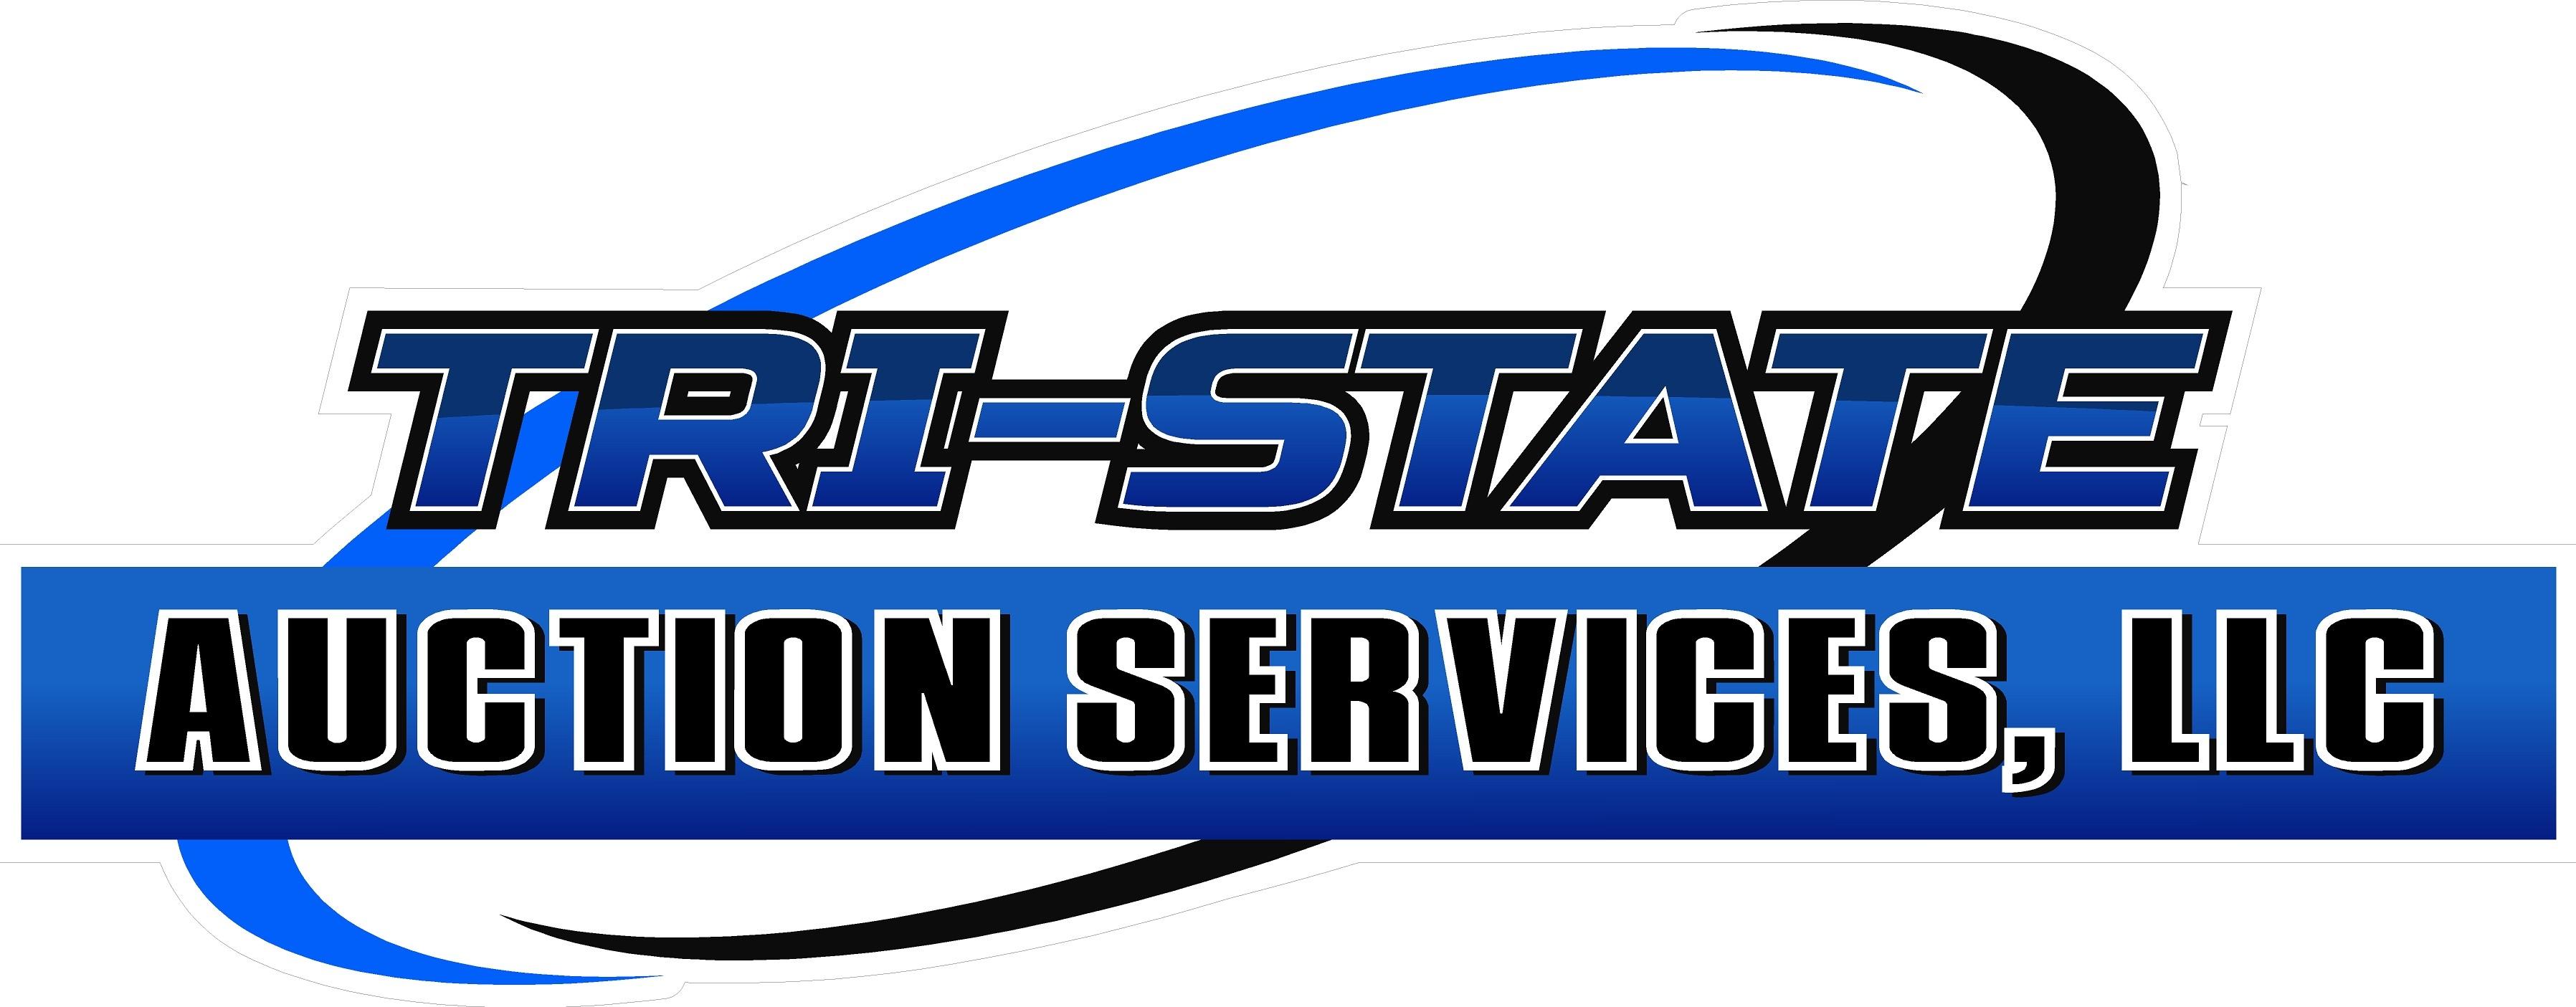 Tri-State Auction Services, LLC.